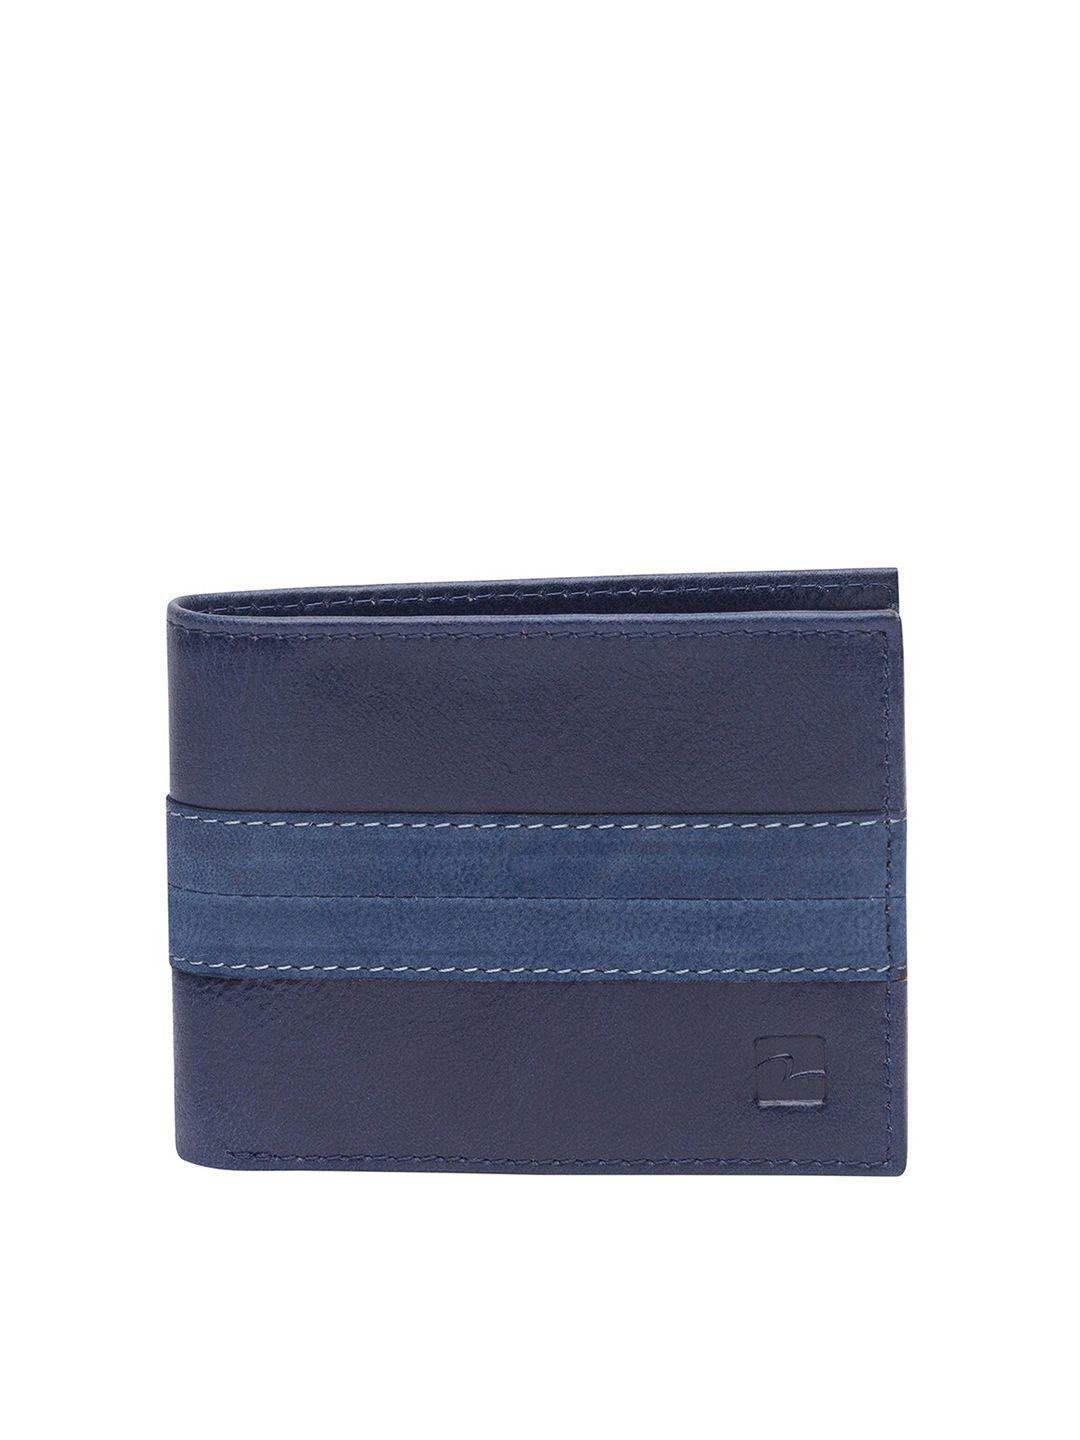 spykar-men-navy-blue-solid-leather-two-fold-wallet